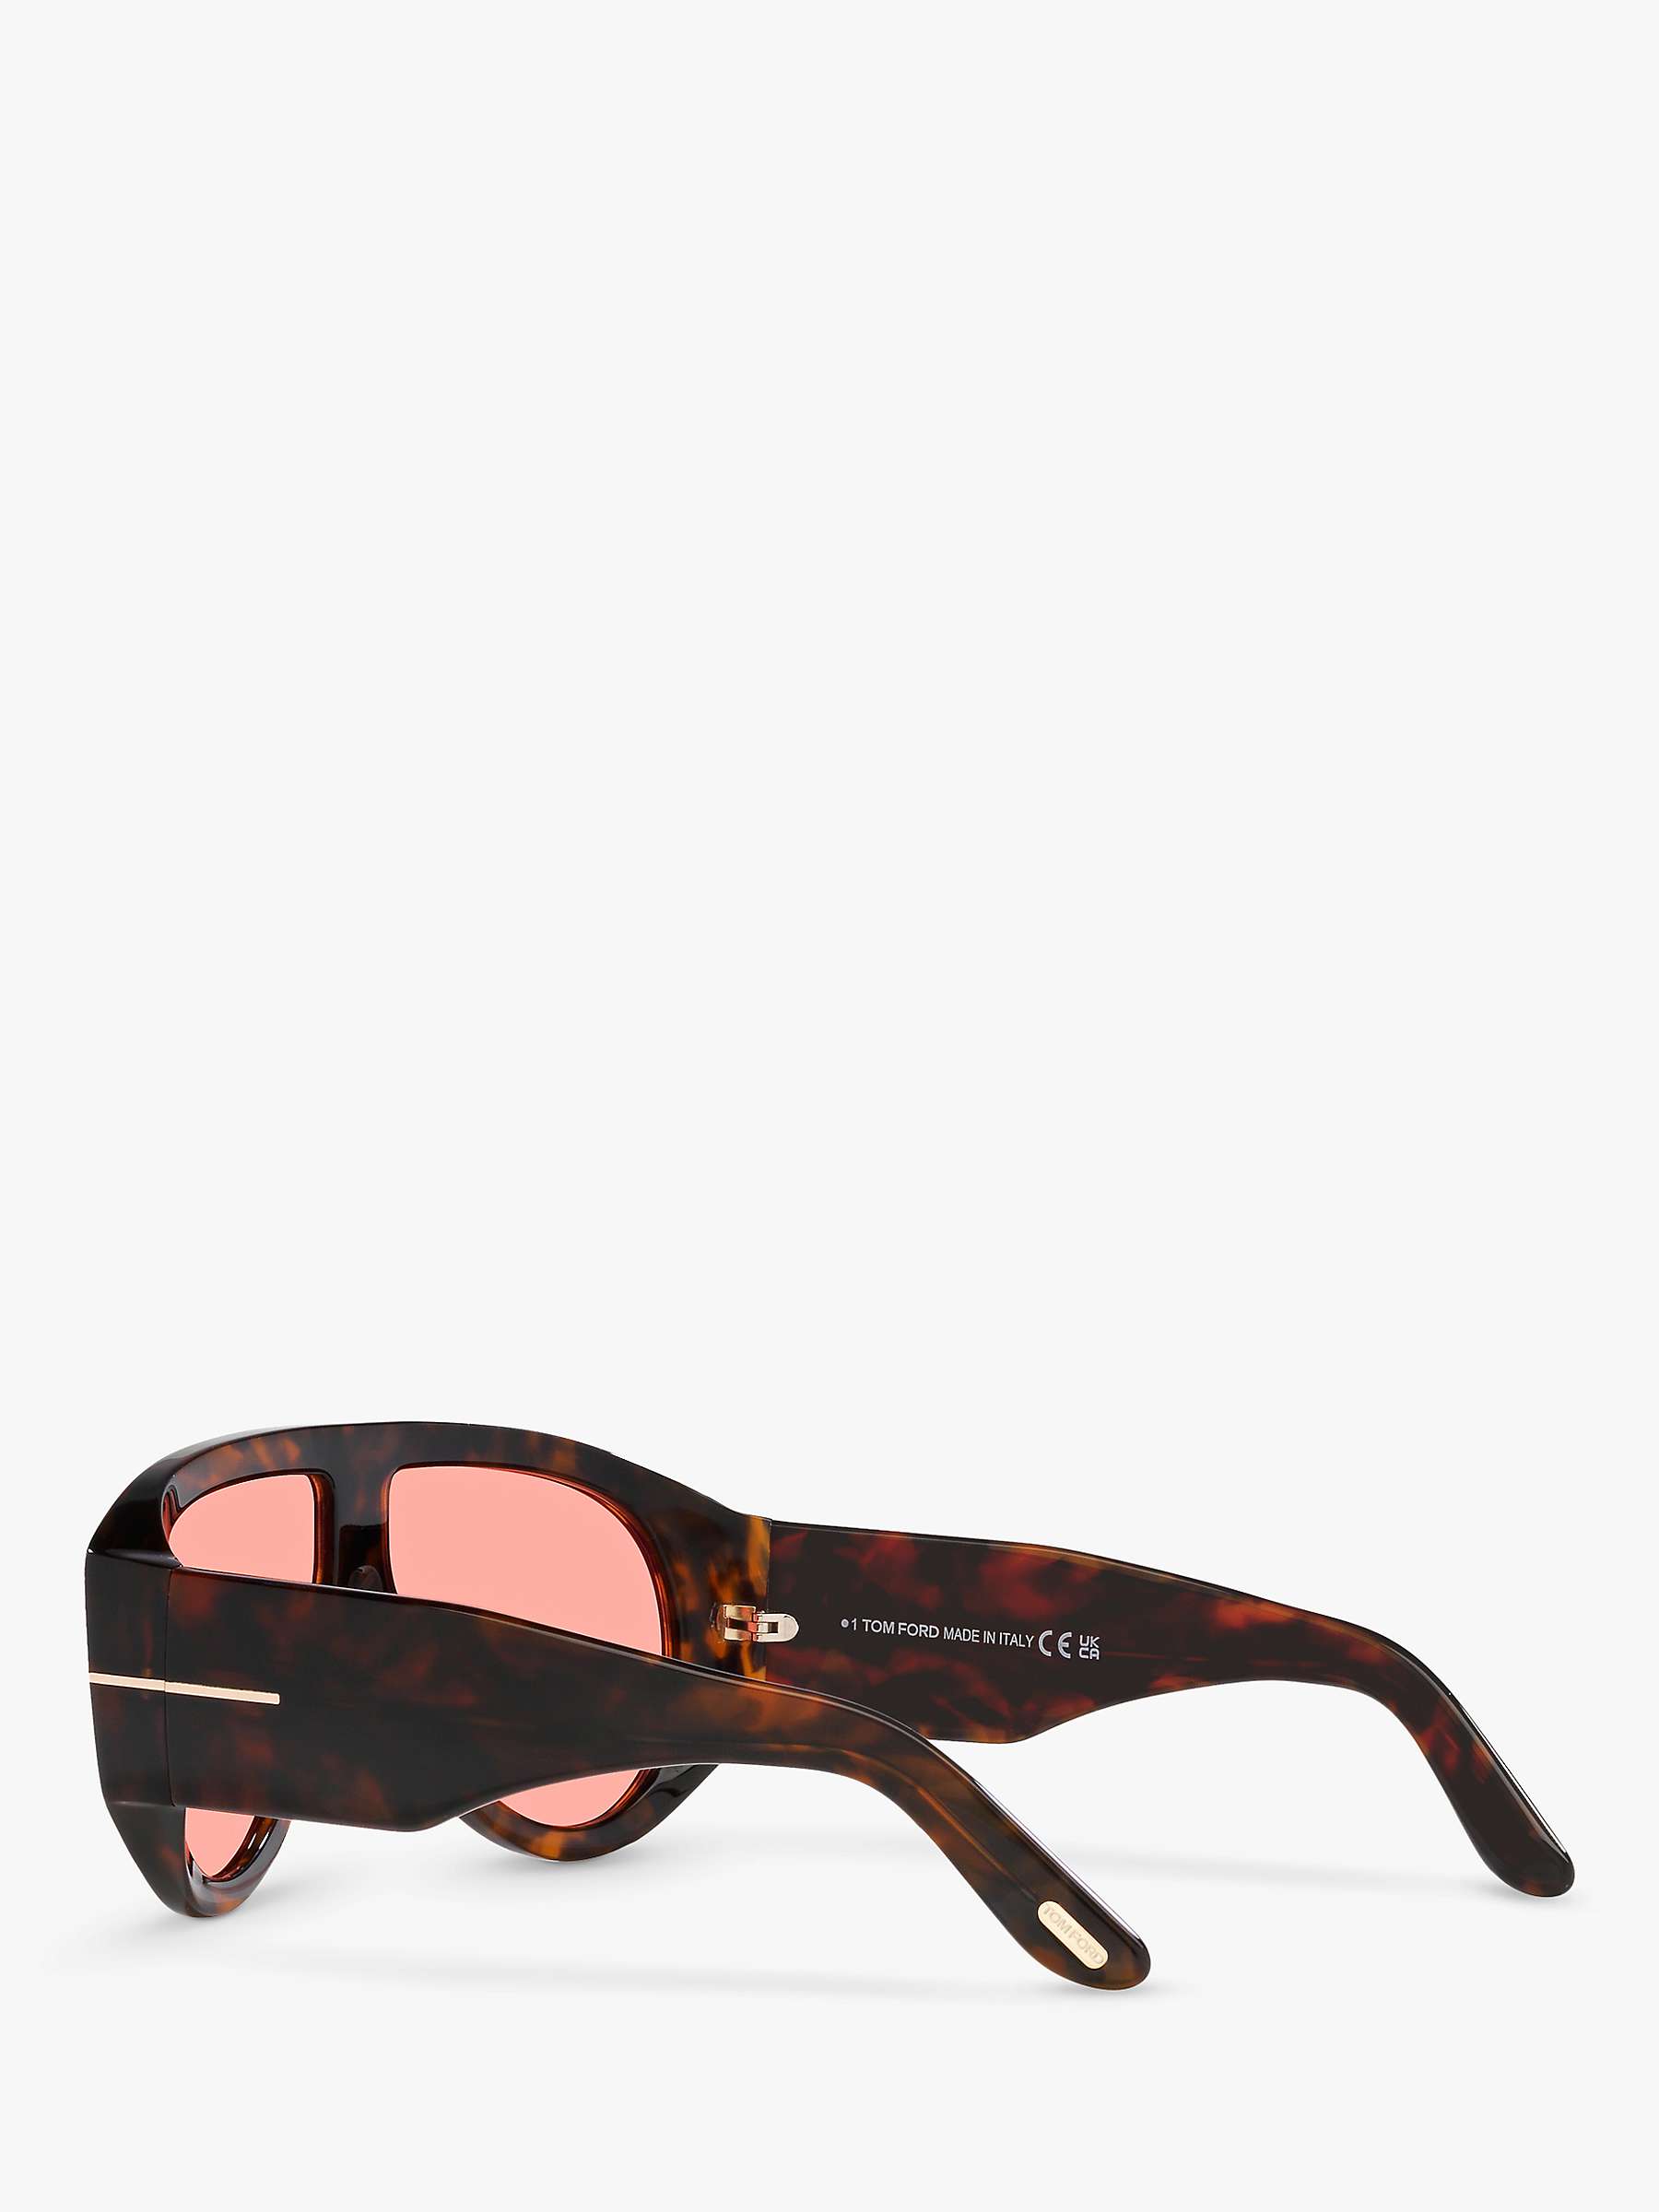 Buy TOM FORD FT1044 Men's Aviator Sunglasses, Brown/Pink Online at johnlewis.com